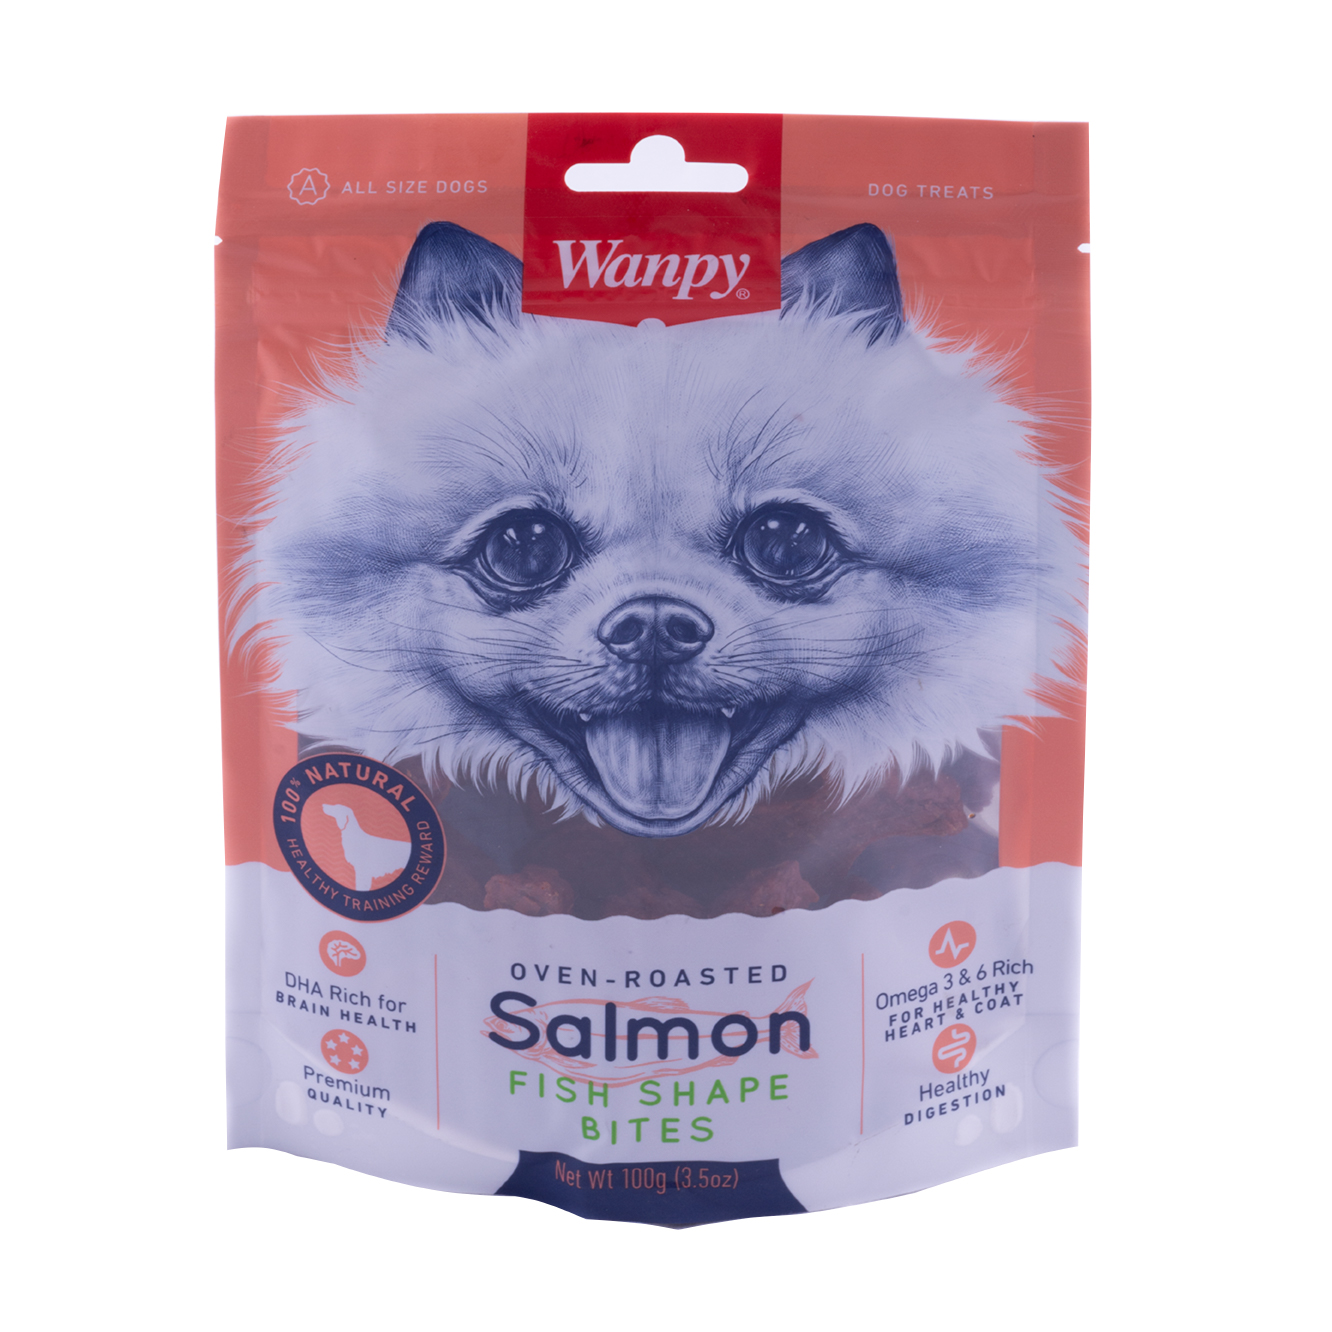 غذای تشویقی سگ ونپی مدل Salmon وزن 100 گرم